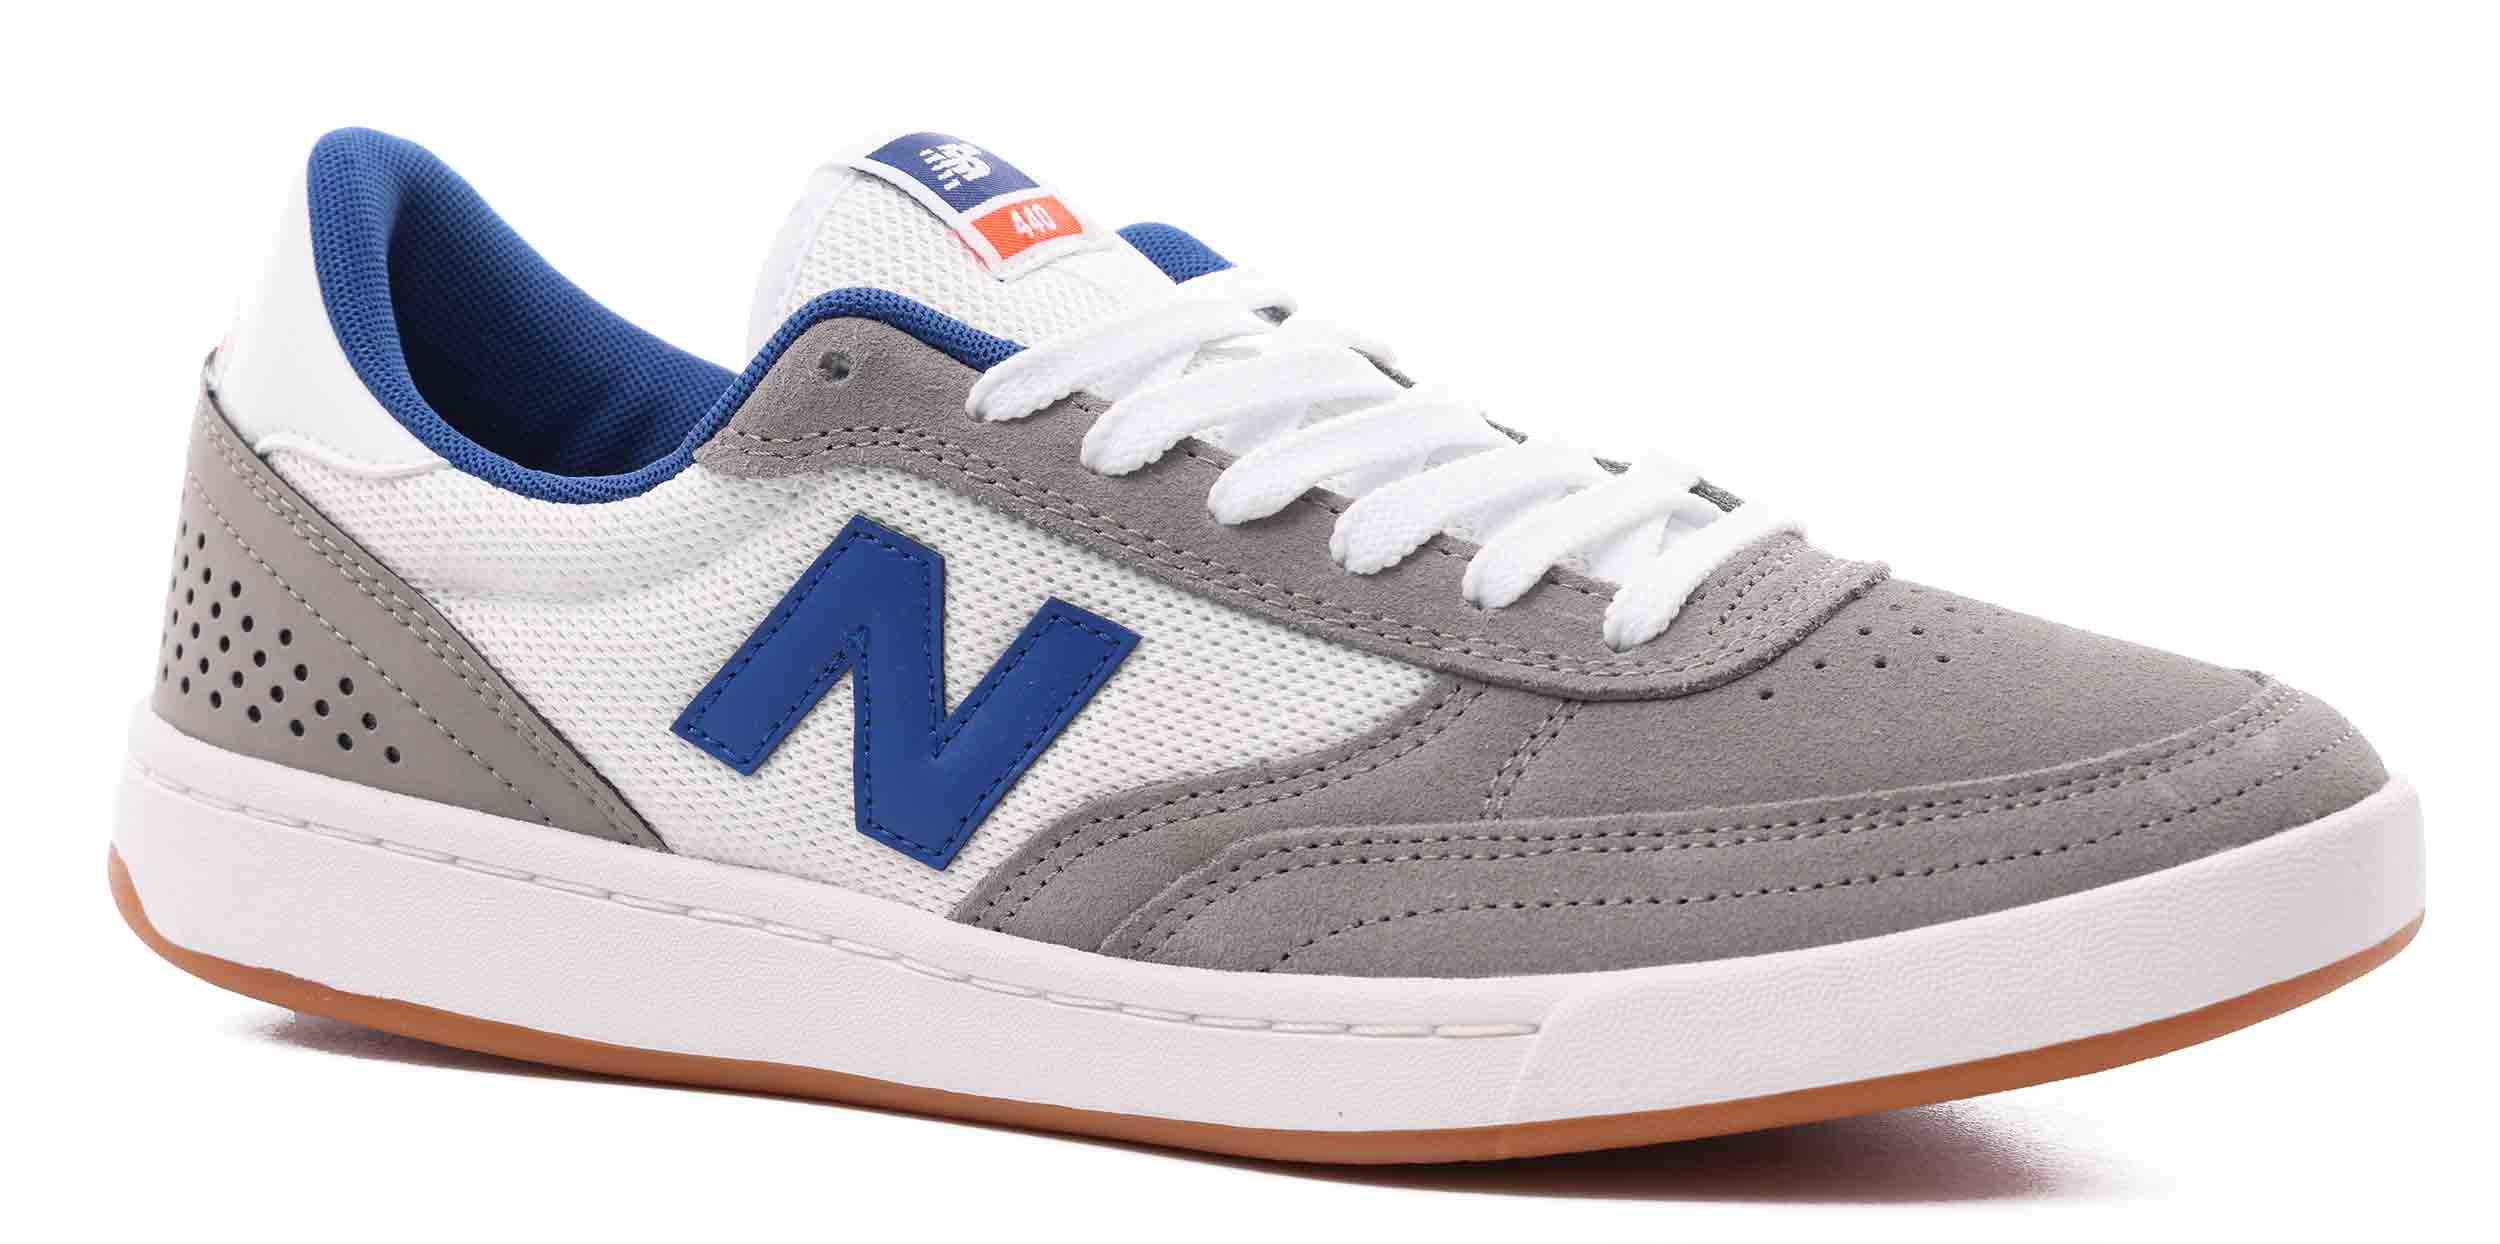 New Balance Numeric 440 Skate Shoes - white/navy/gum - Free Shipping ...